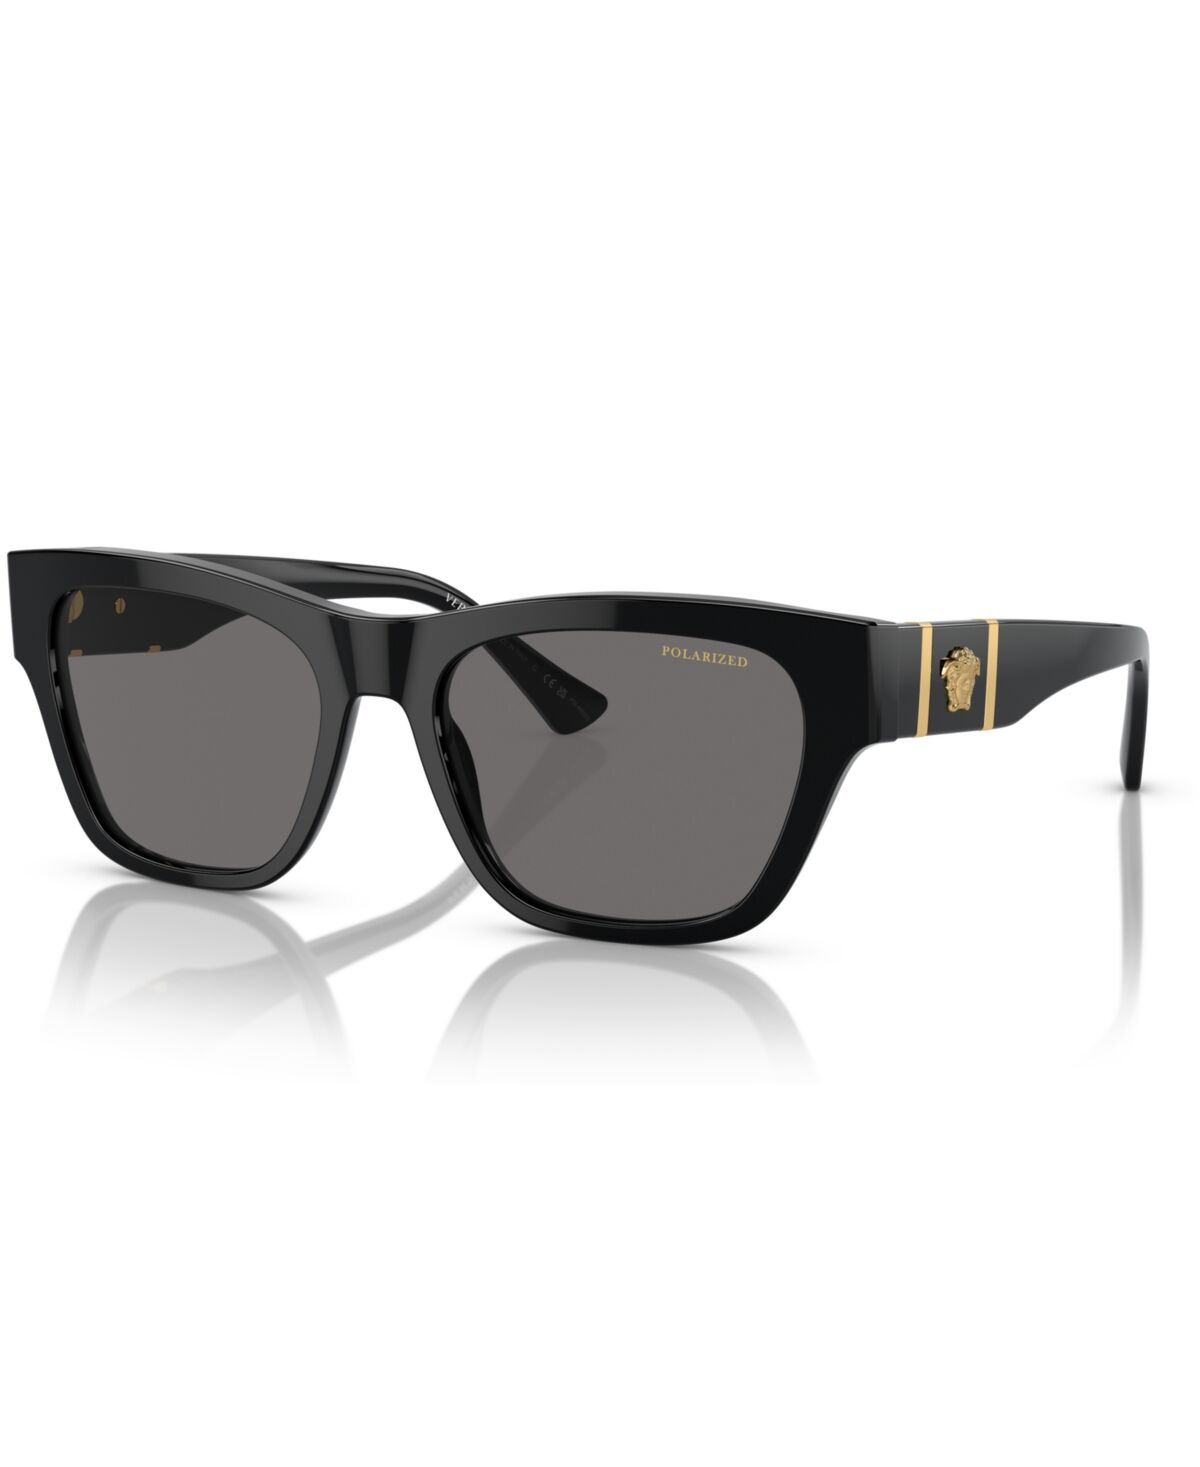 Versace Men's Polarized Sunglasses, VE4457 - Black